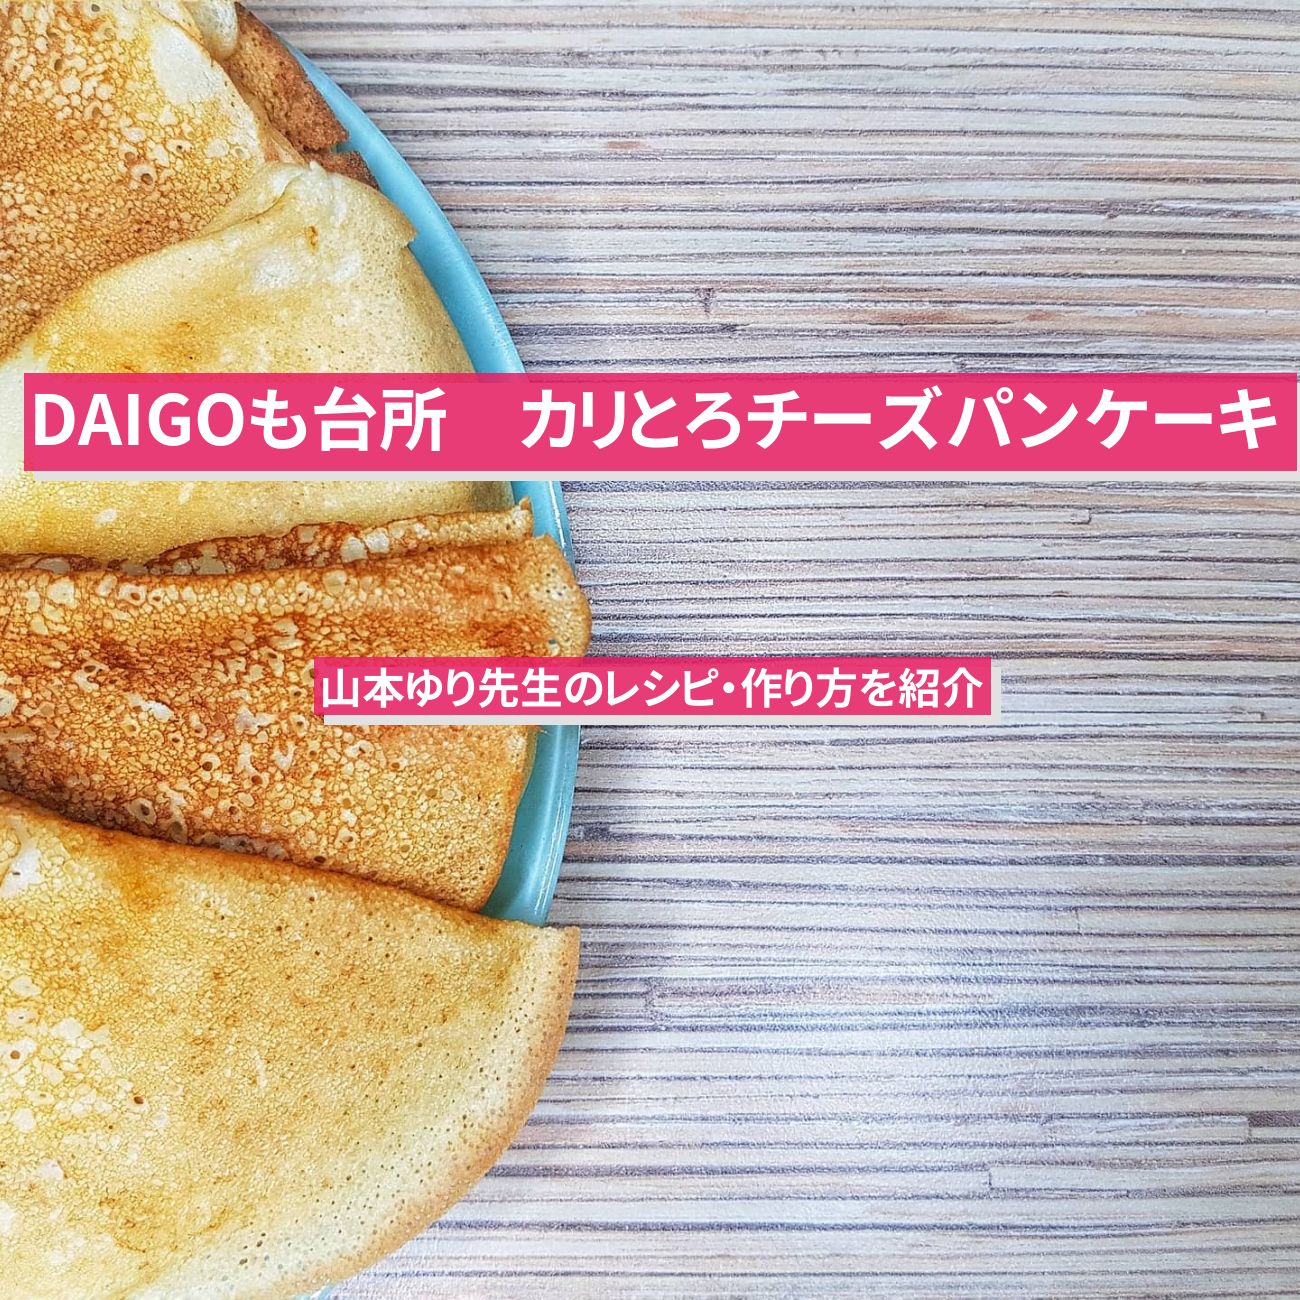 【DAIGOも台所】『カリとろチーズパンケーキ』山本ゆり先生のレシピ・作り方を紹介〔ダイゴも台所〕